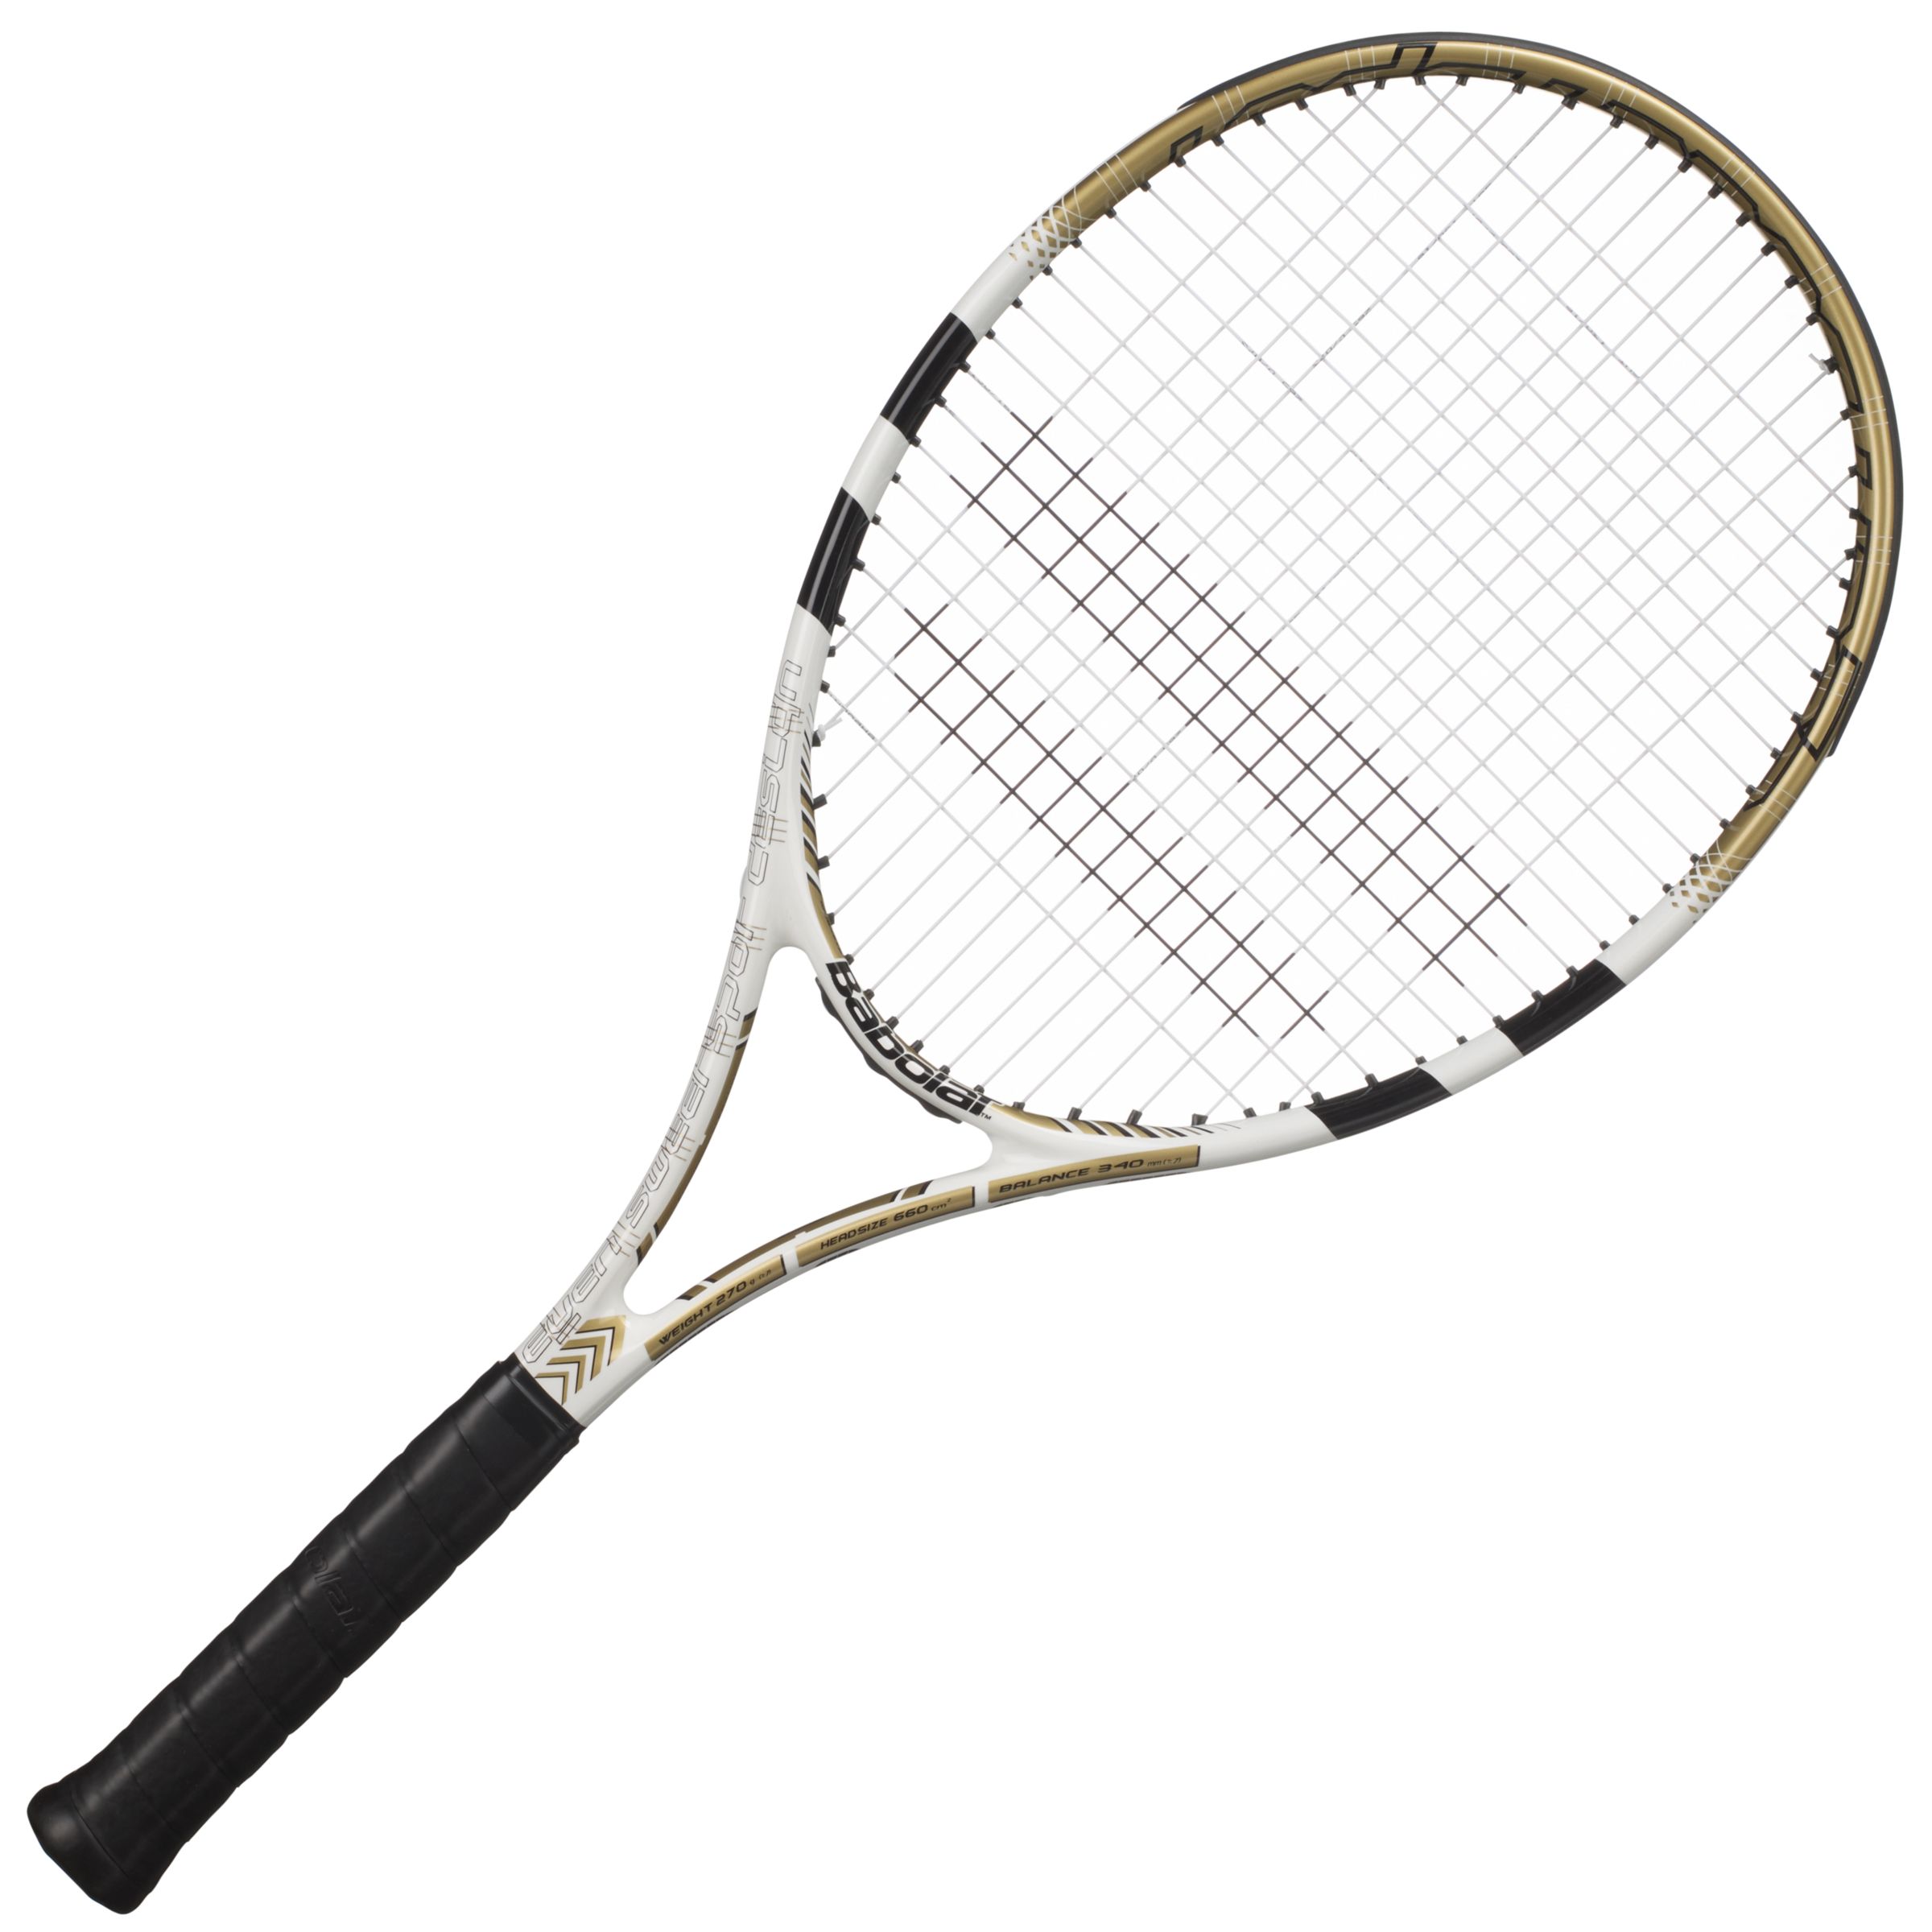 Pulsion 102 Tennis Racket